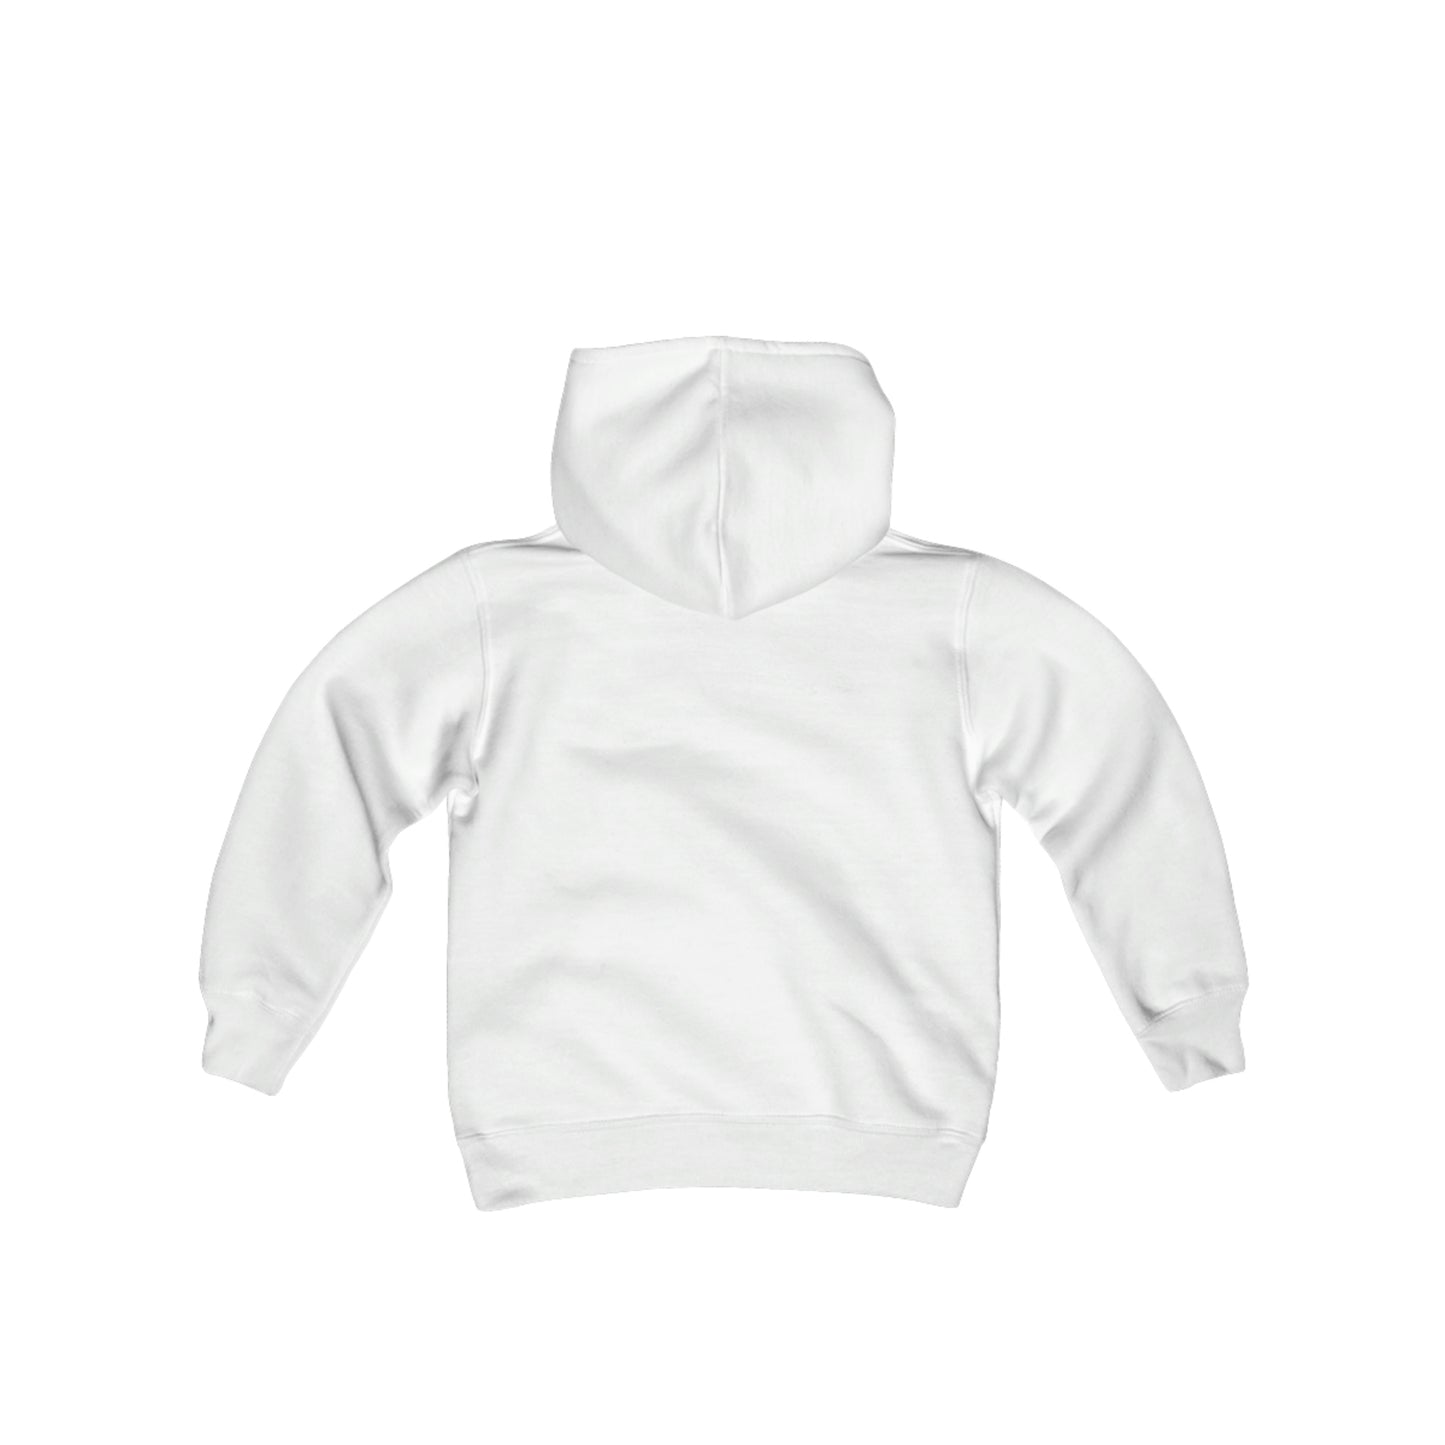 Future Influencer Kids Hooded Sweatshirt